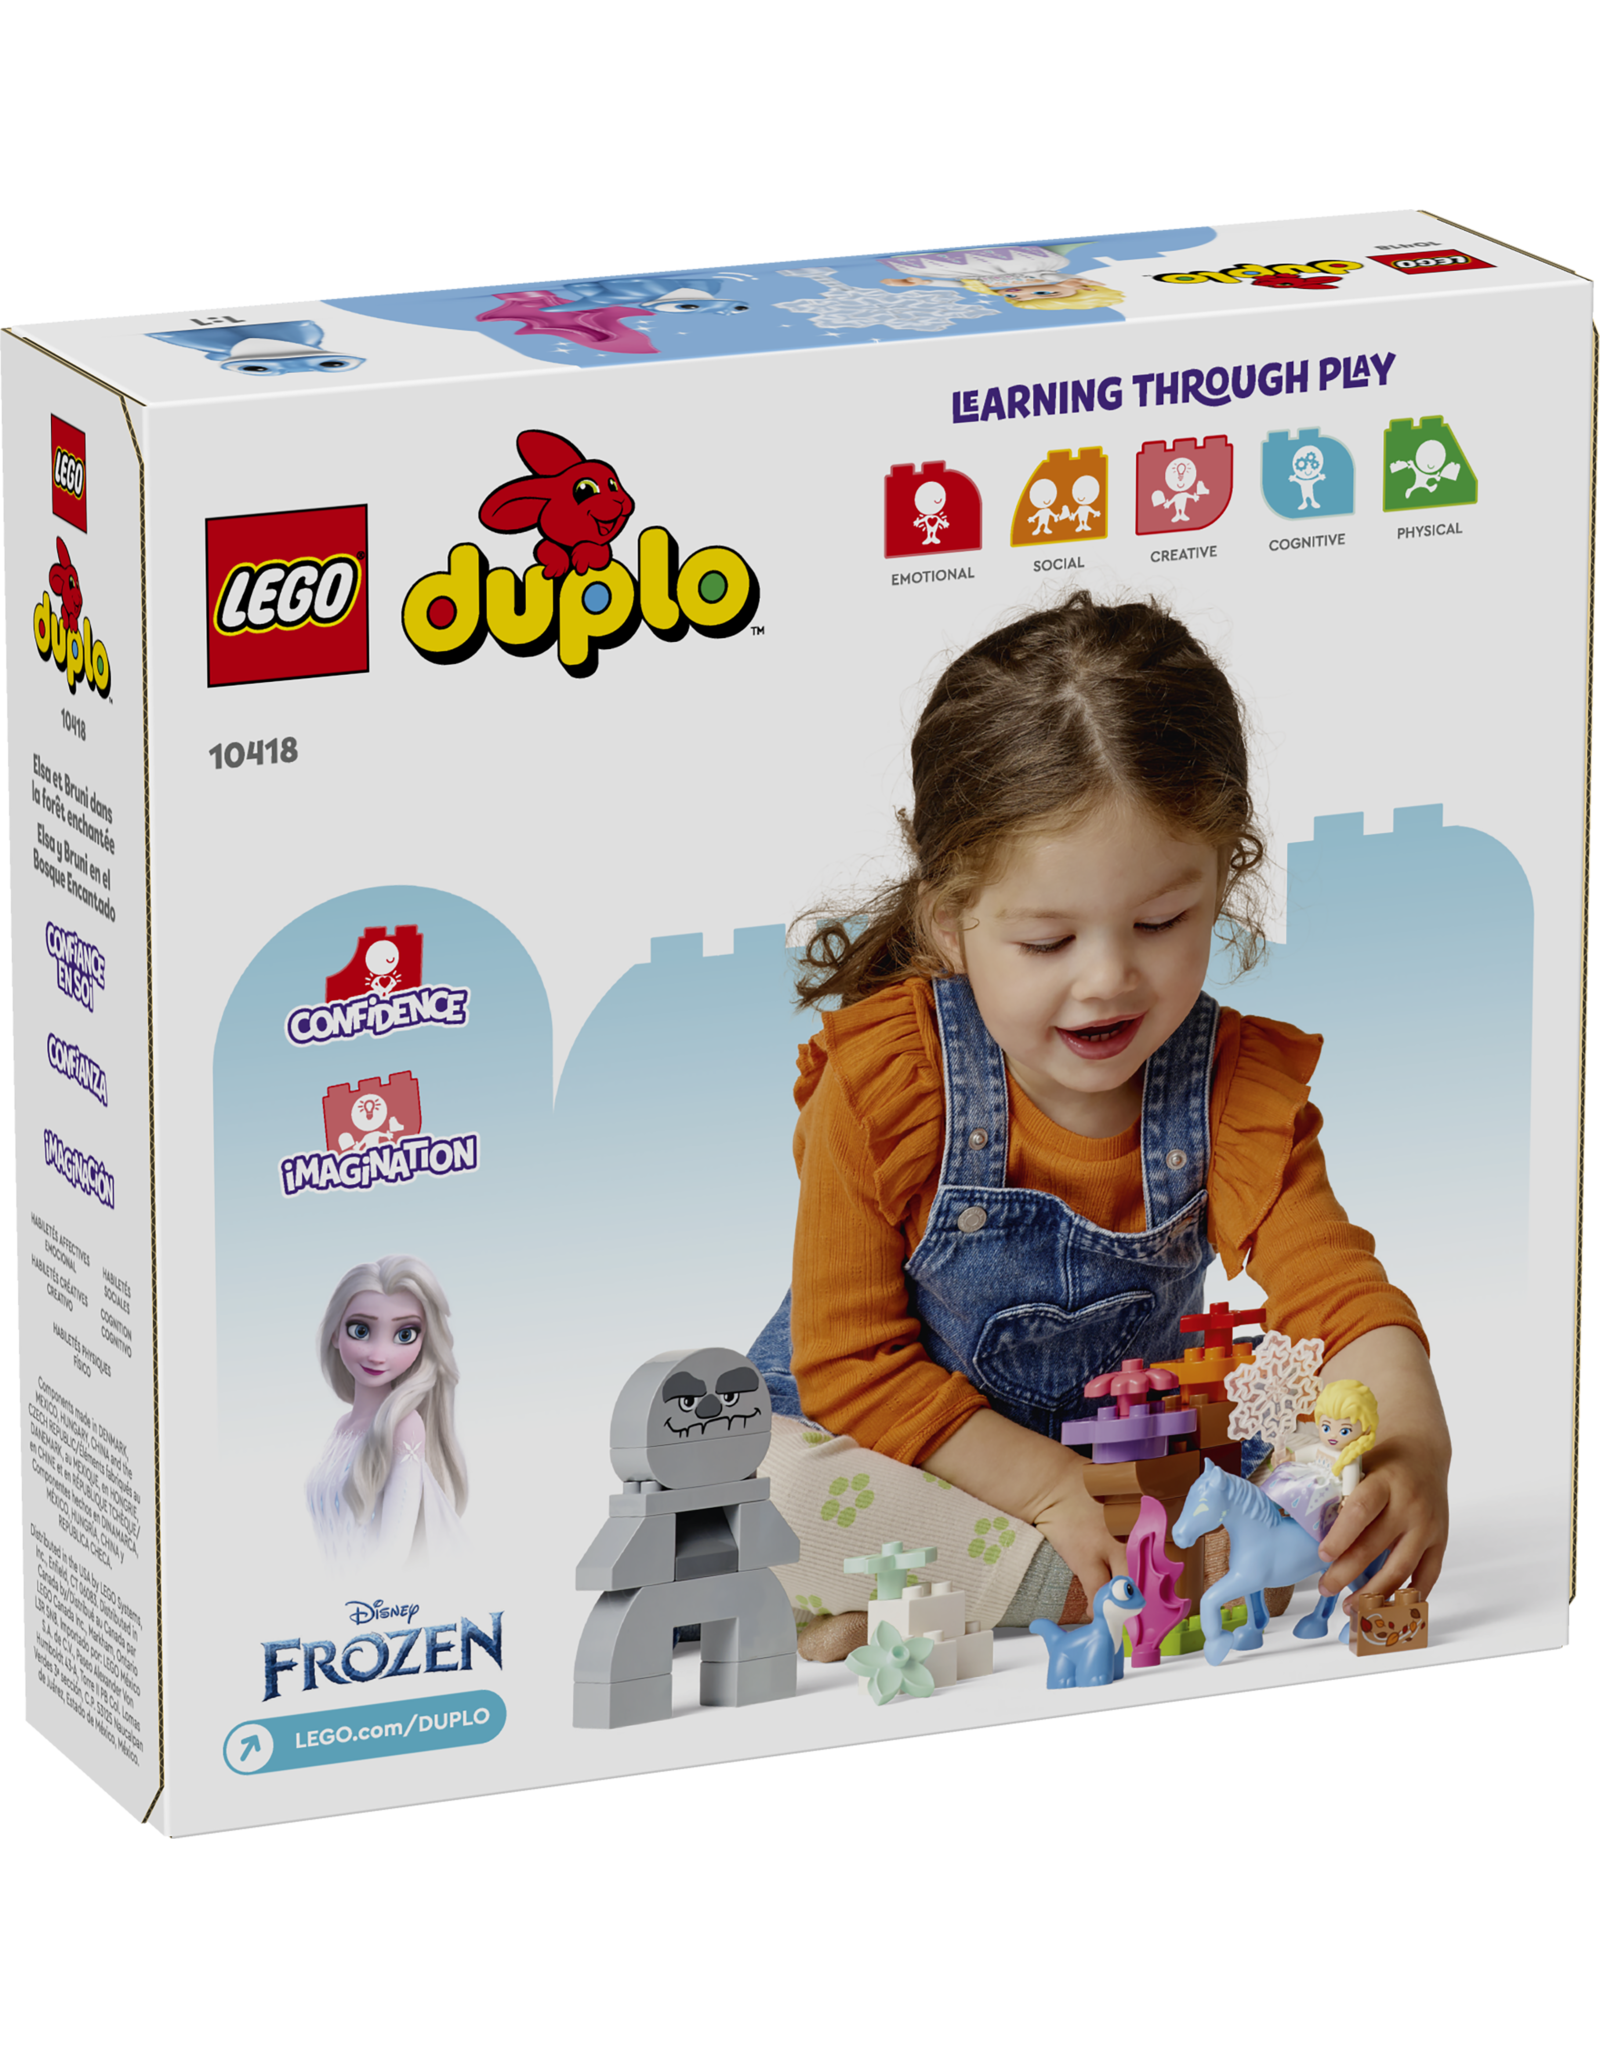 LEGO DUPLO Disney  10418 Elsa & Bruni in the Enchanted Forest